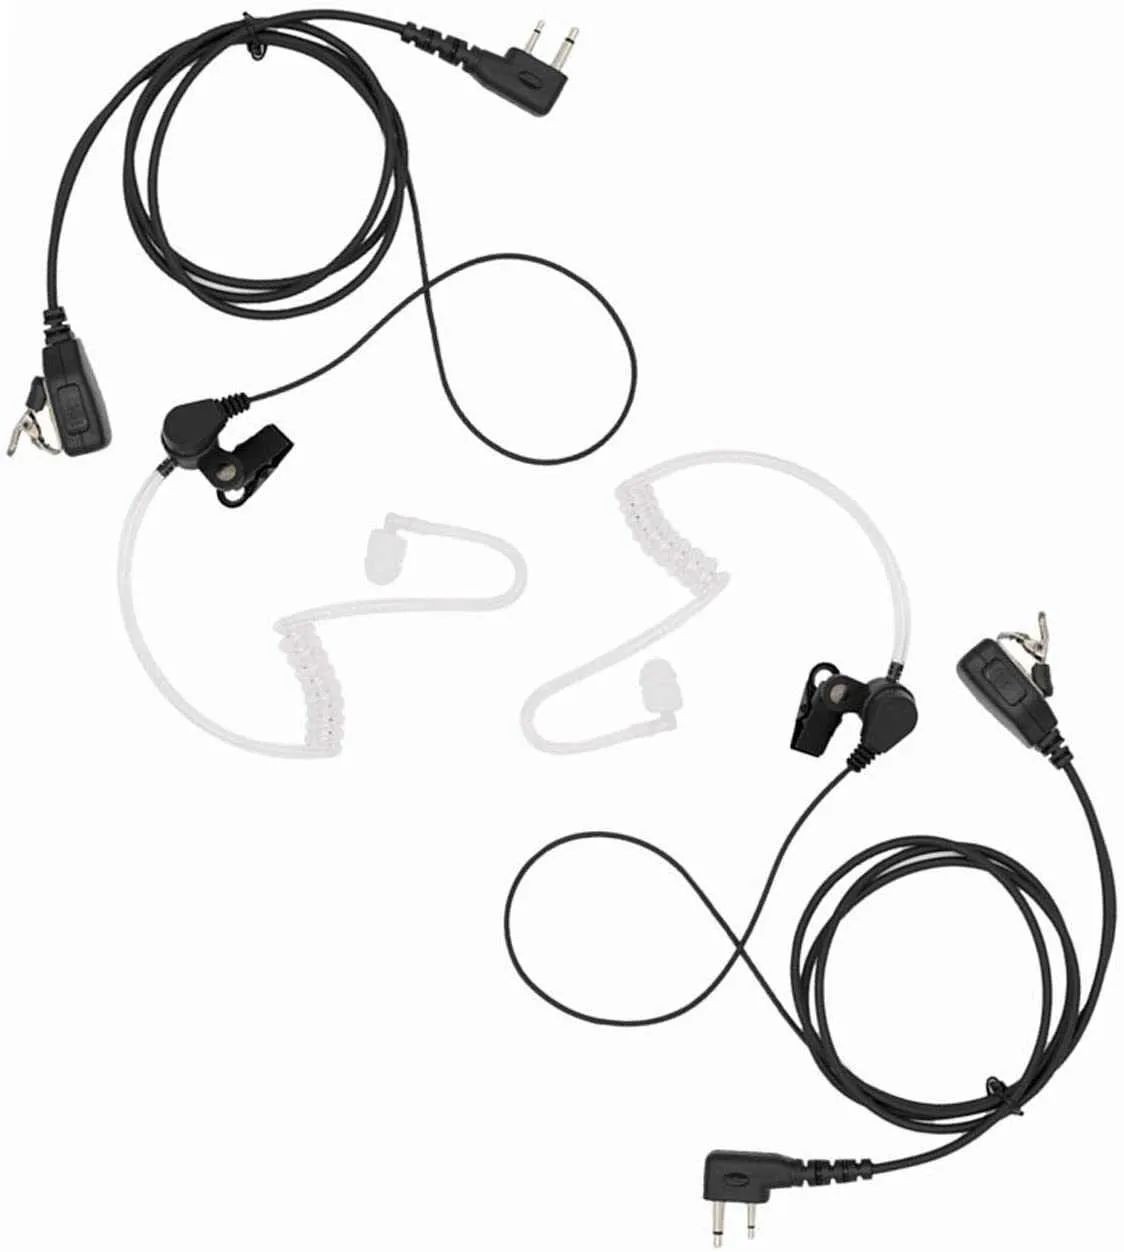 Acoustic Tube Surveillance Earpiece Headset Compatible with Icom IC-F24S IC-F3 IC-F4 IC-H6 IC-U12 IC-V82 IC-F4011 RadioPU Materi